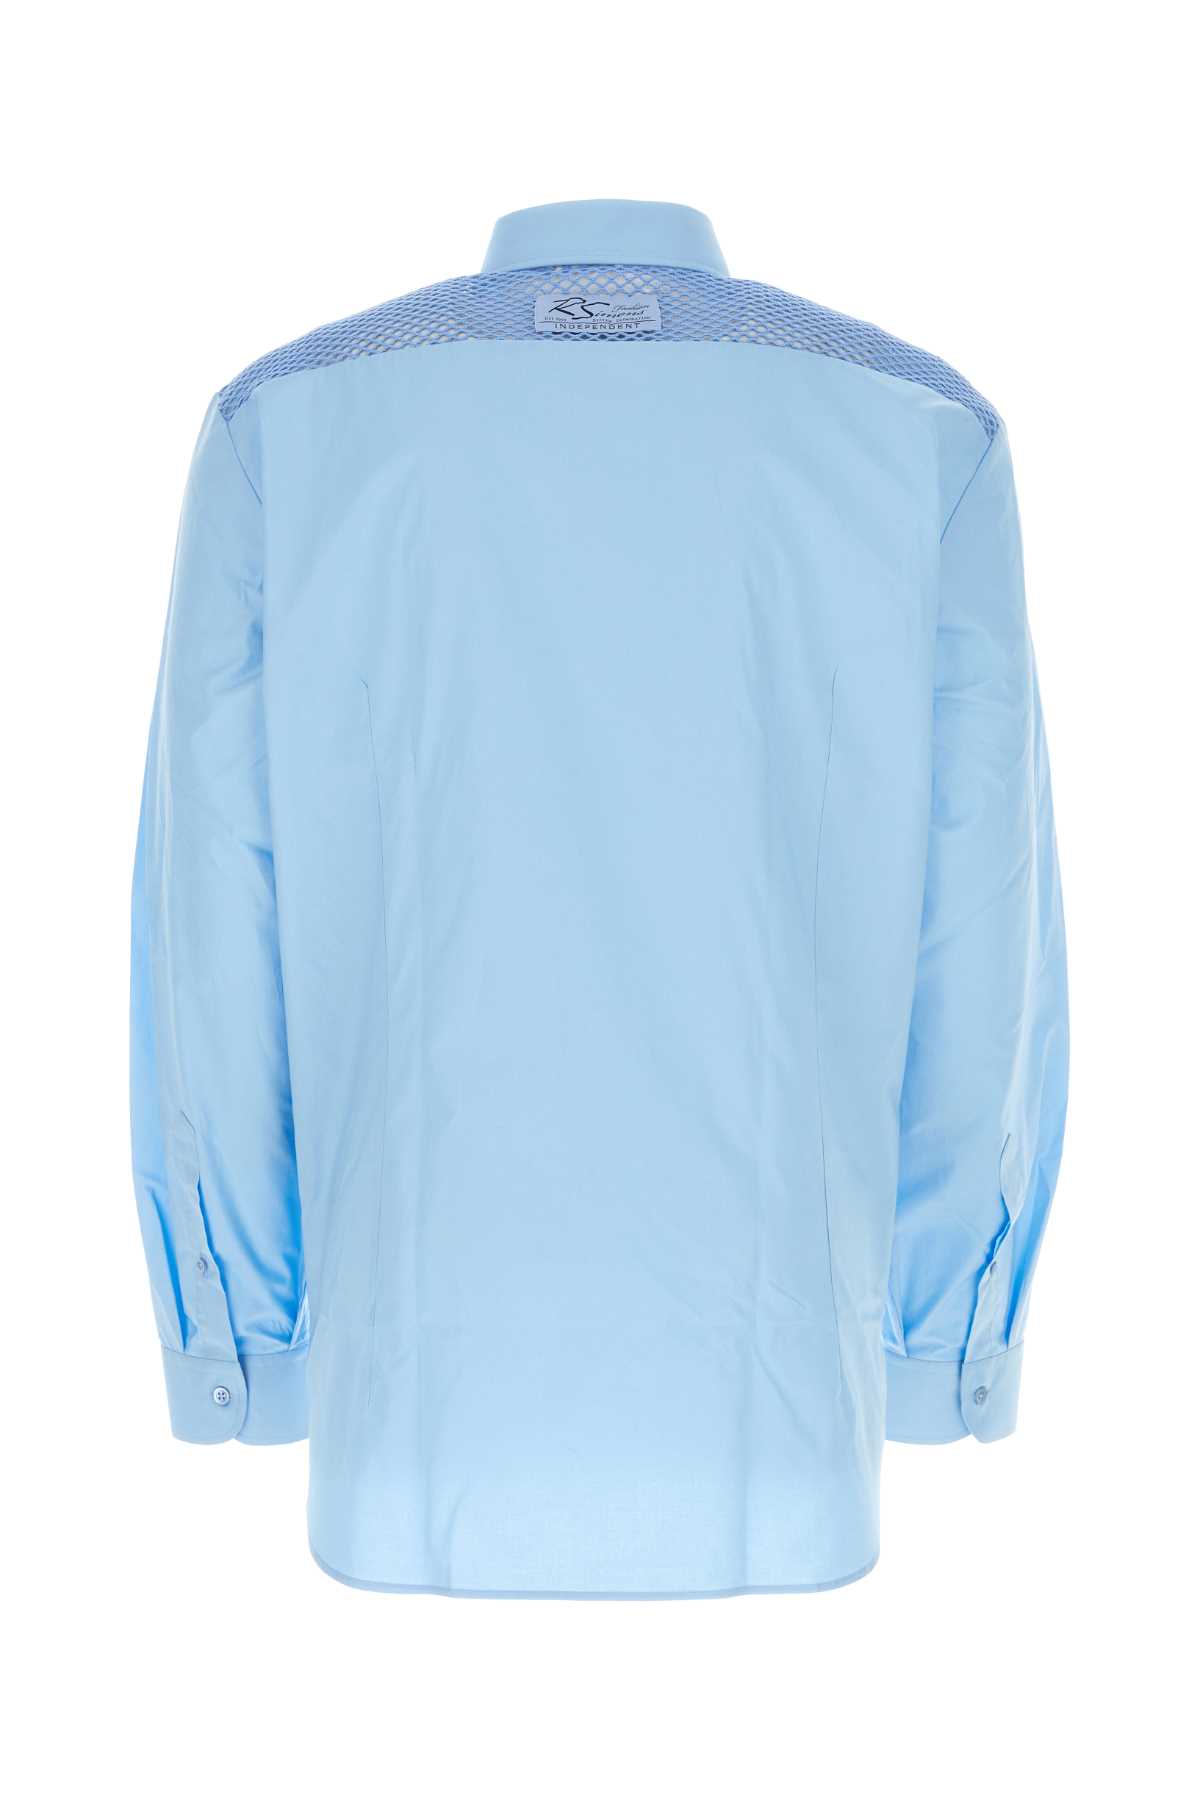 Raf Simons Light-blue Poplin Oversize Shirt